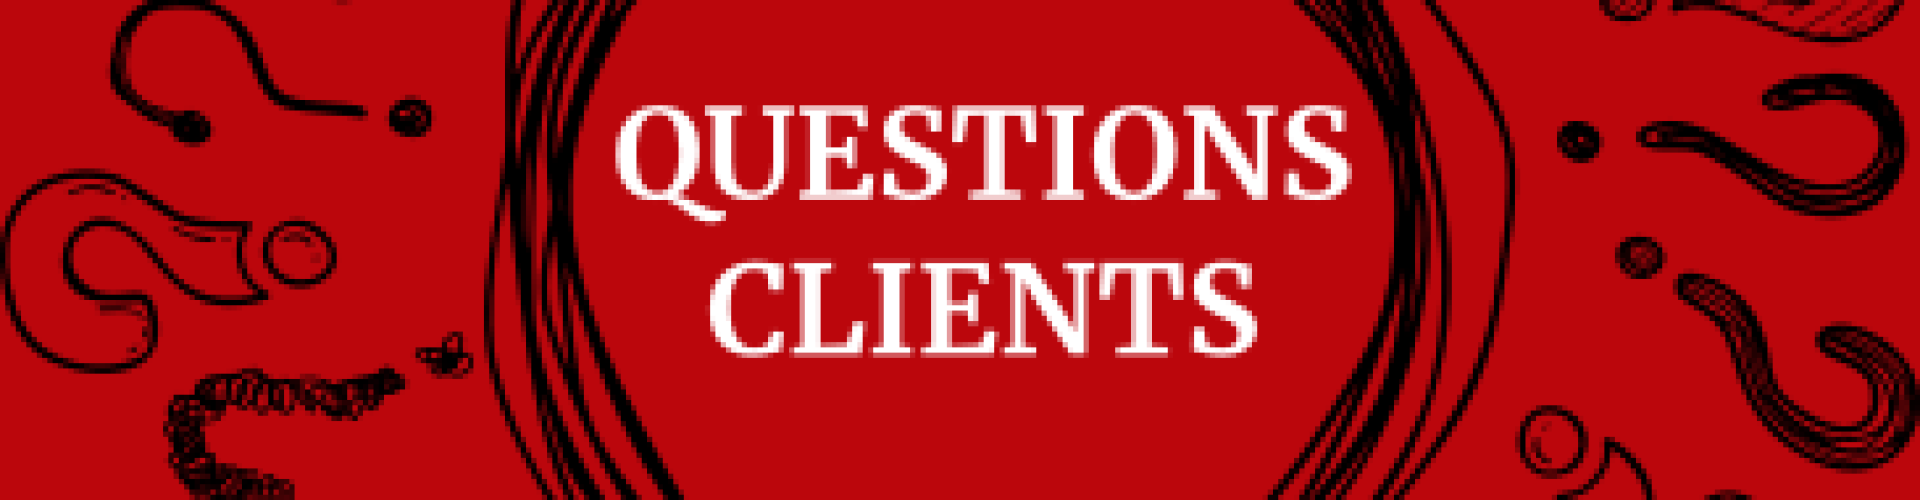 Questions Clients